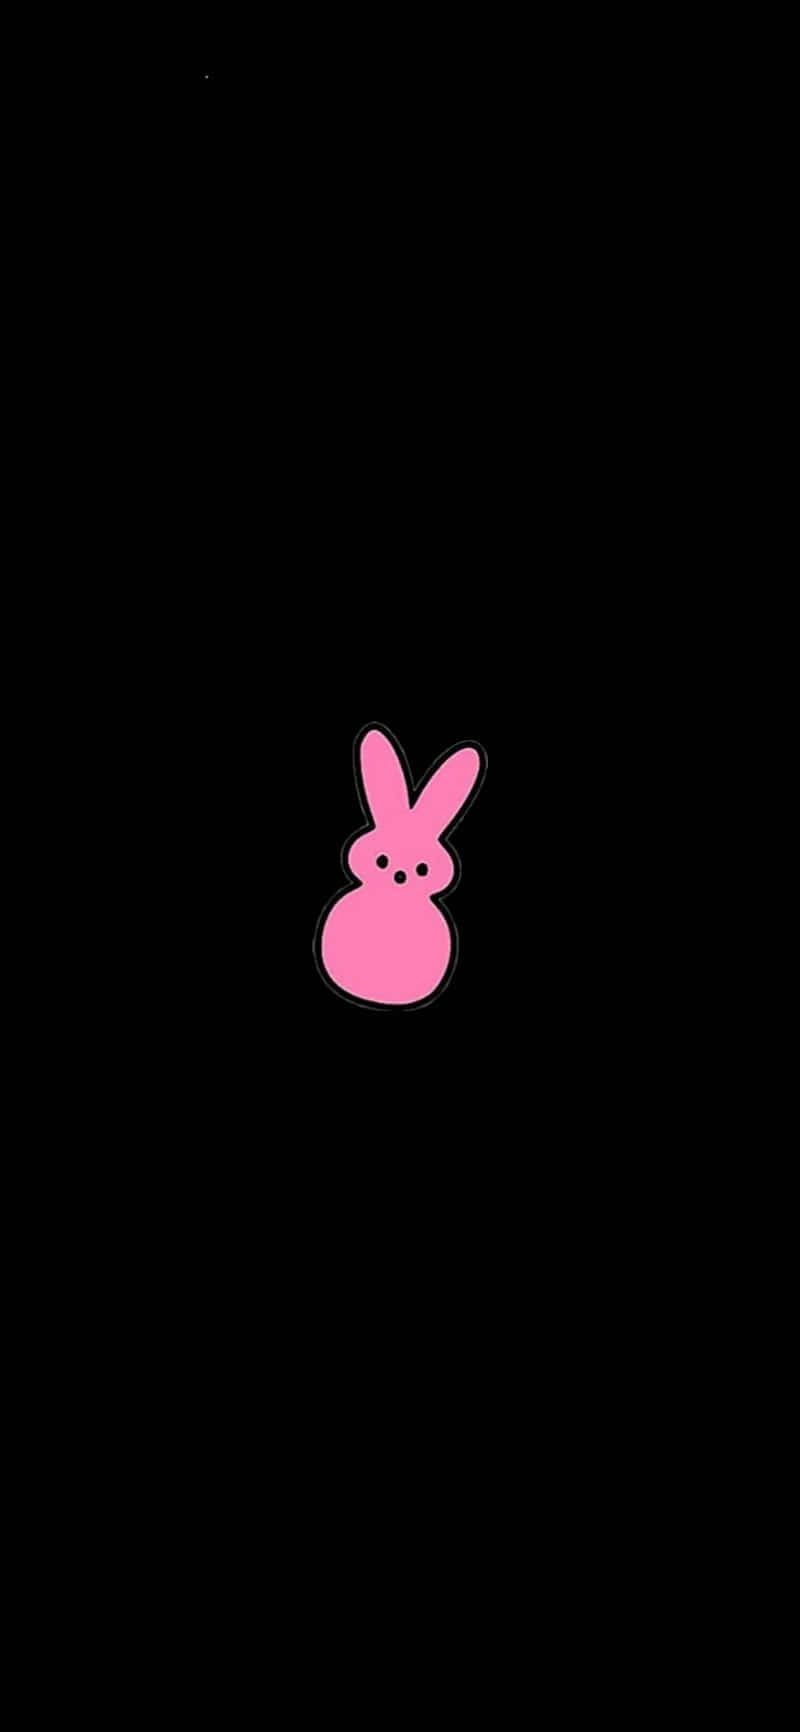 Lil Peep’s Iconic Logo Wallpaper